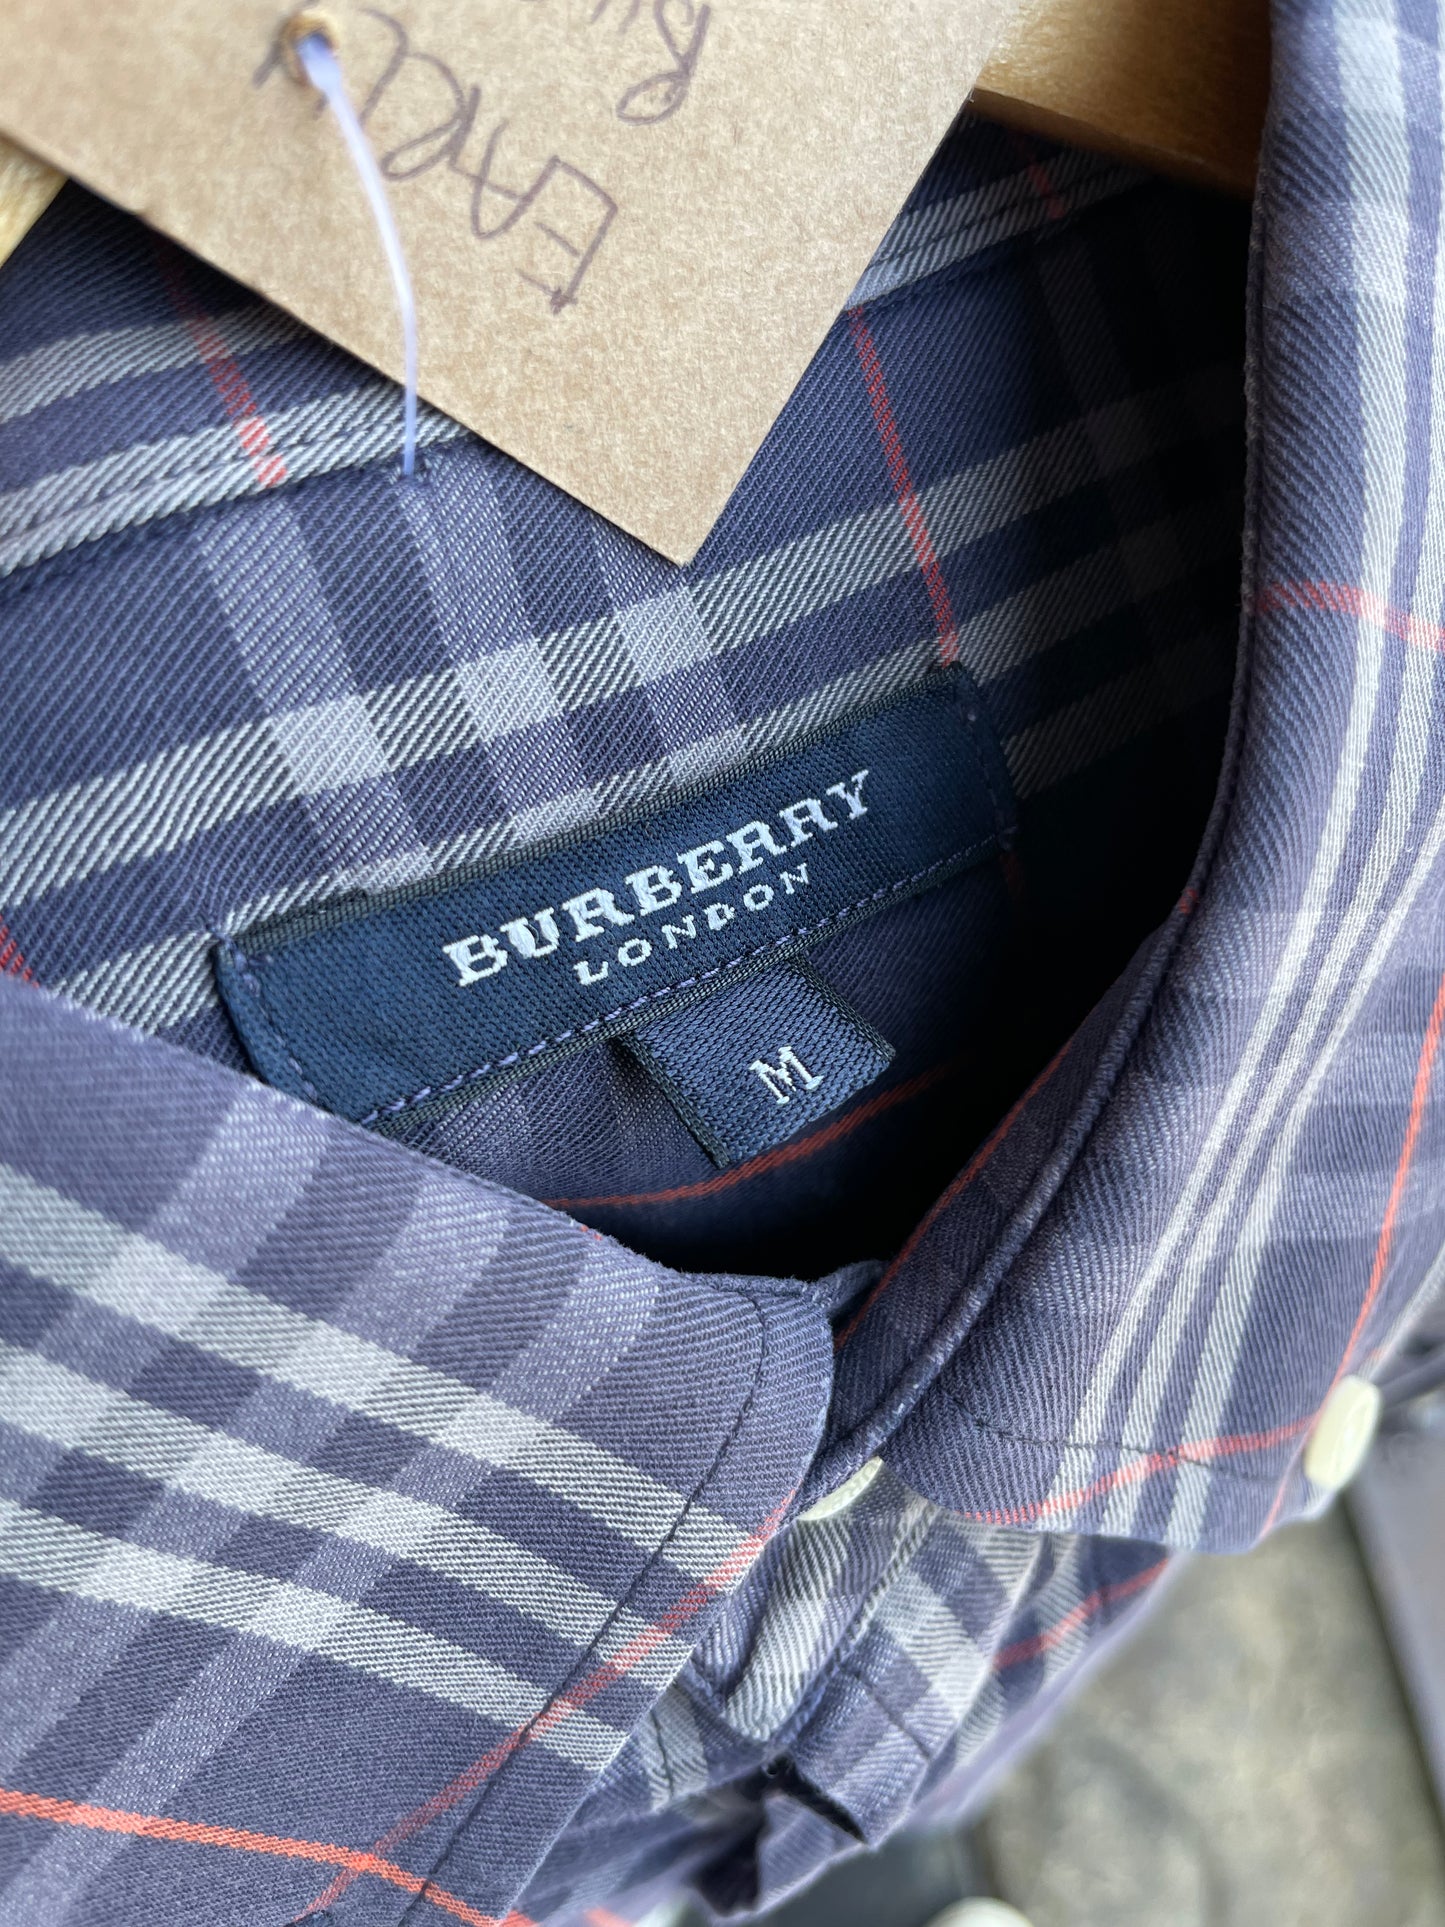 Burberry London Nova check shirt (M)